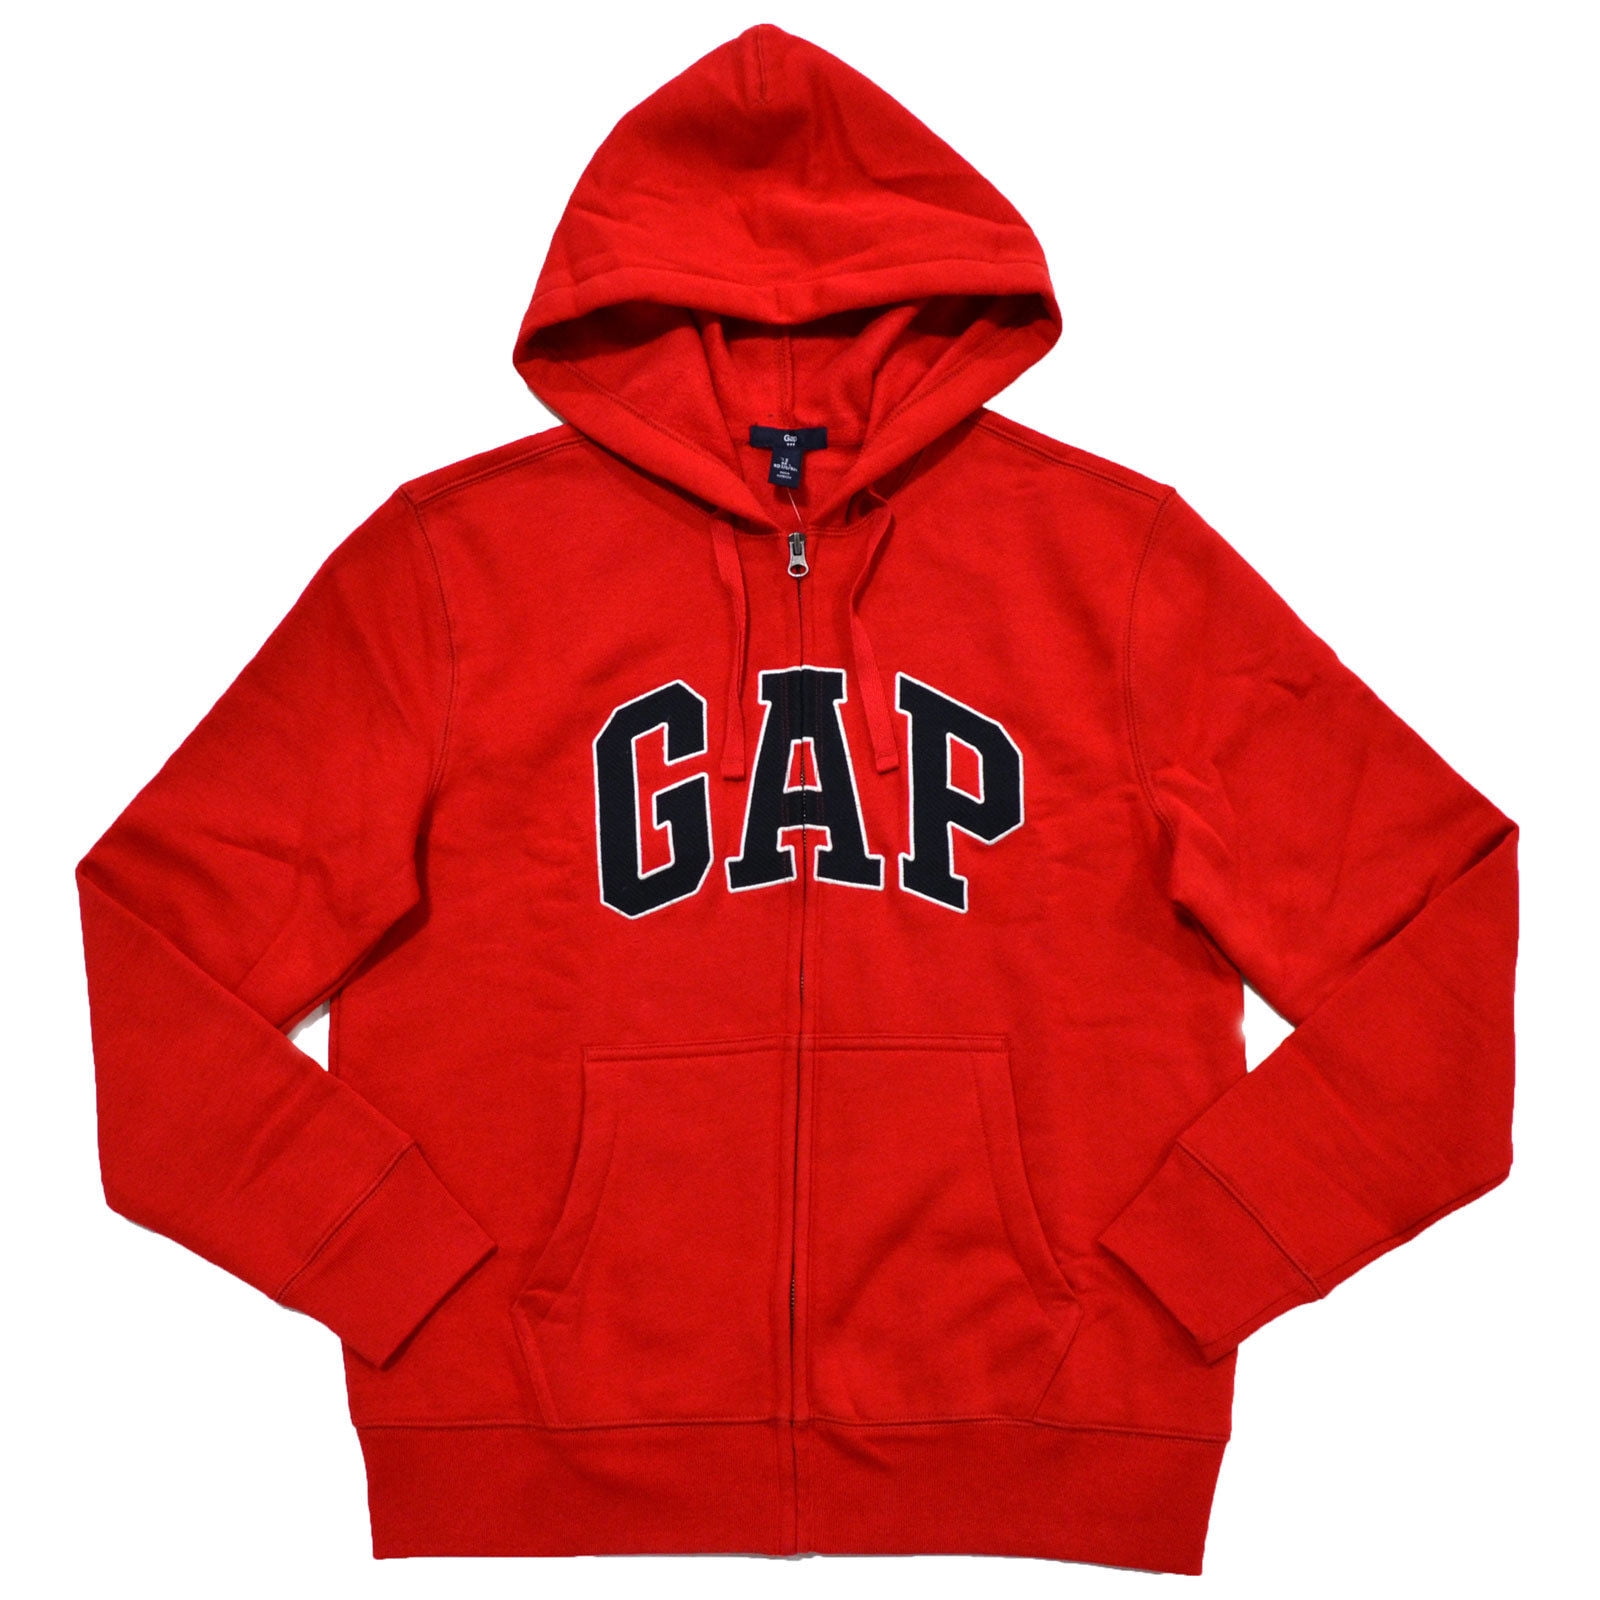 Gap Brown Hoodies & Sweatshirts for Men for Sale, Shop Men's Athletic  Clothes